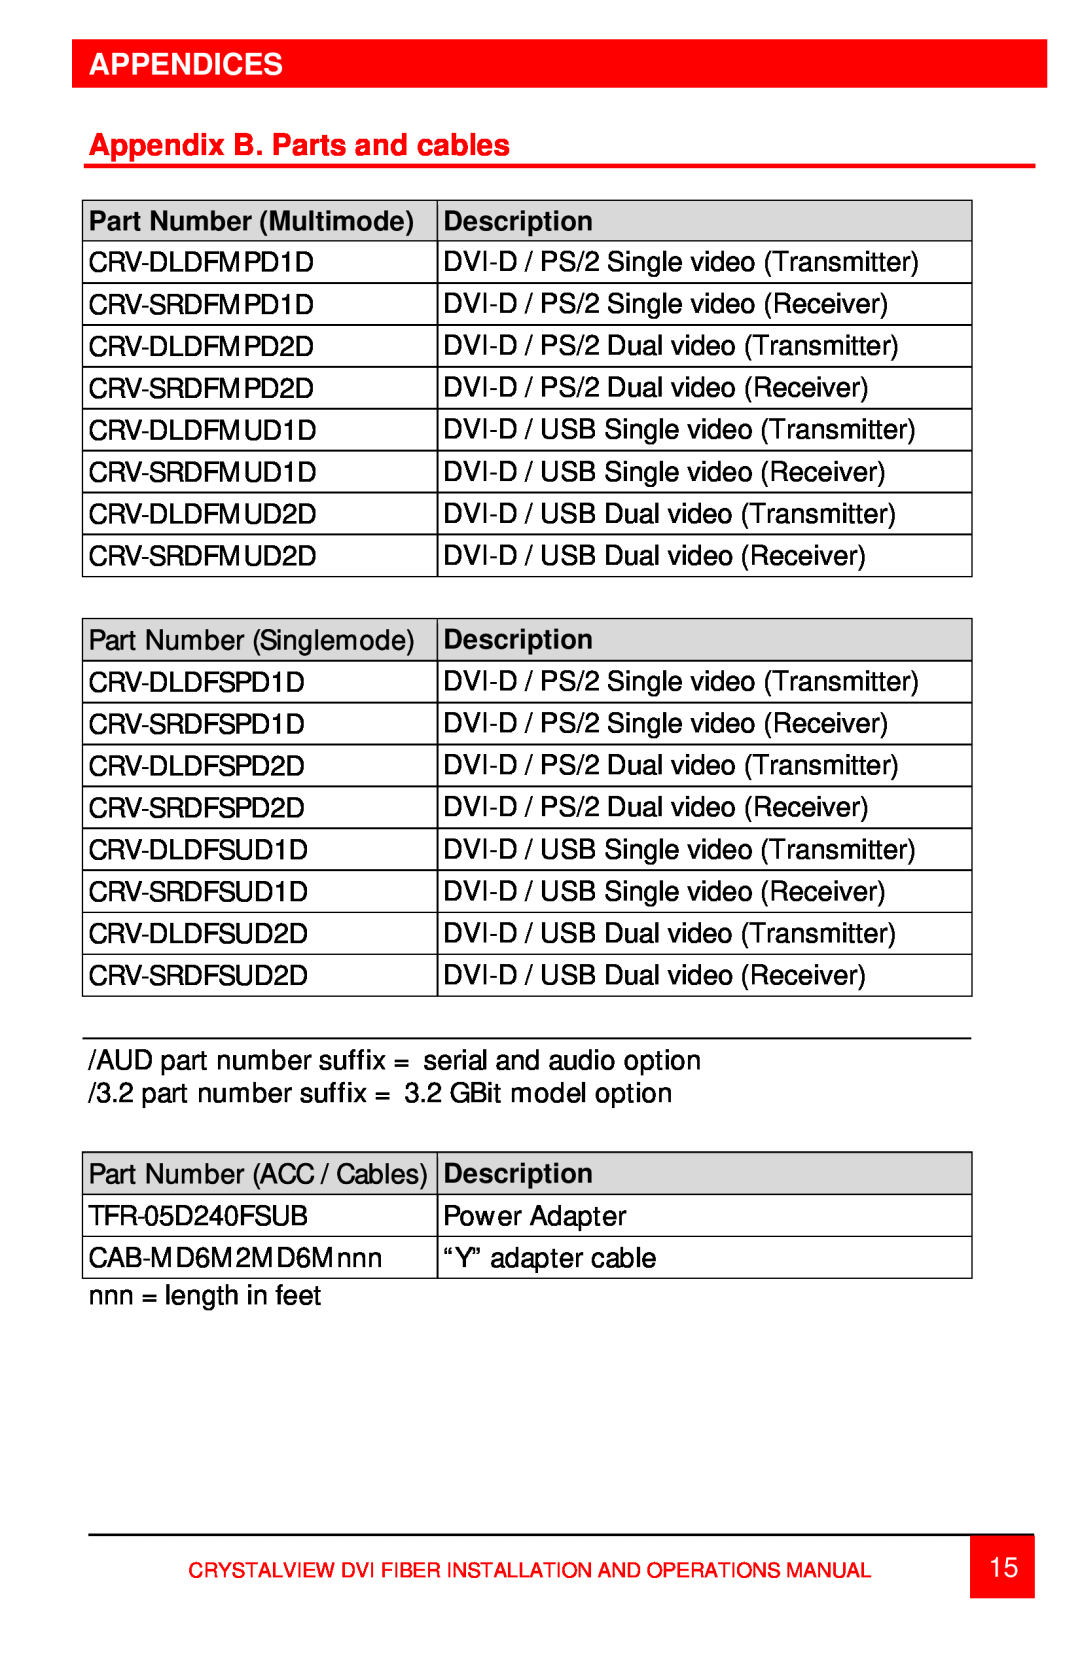 Rose electronic DVI Fiber DIGITAL FIBER KVM EXTENDER Appendix B. Parts and cables, Part Number Multimode, Description 